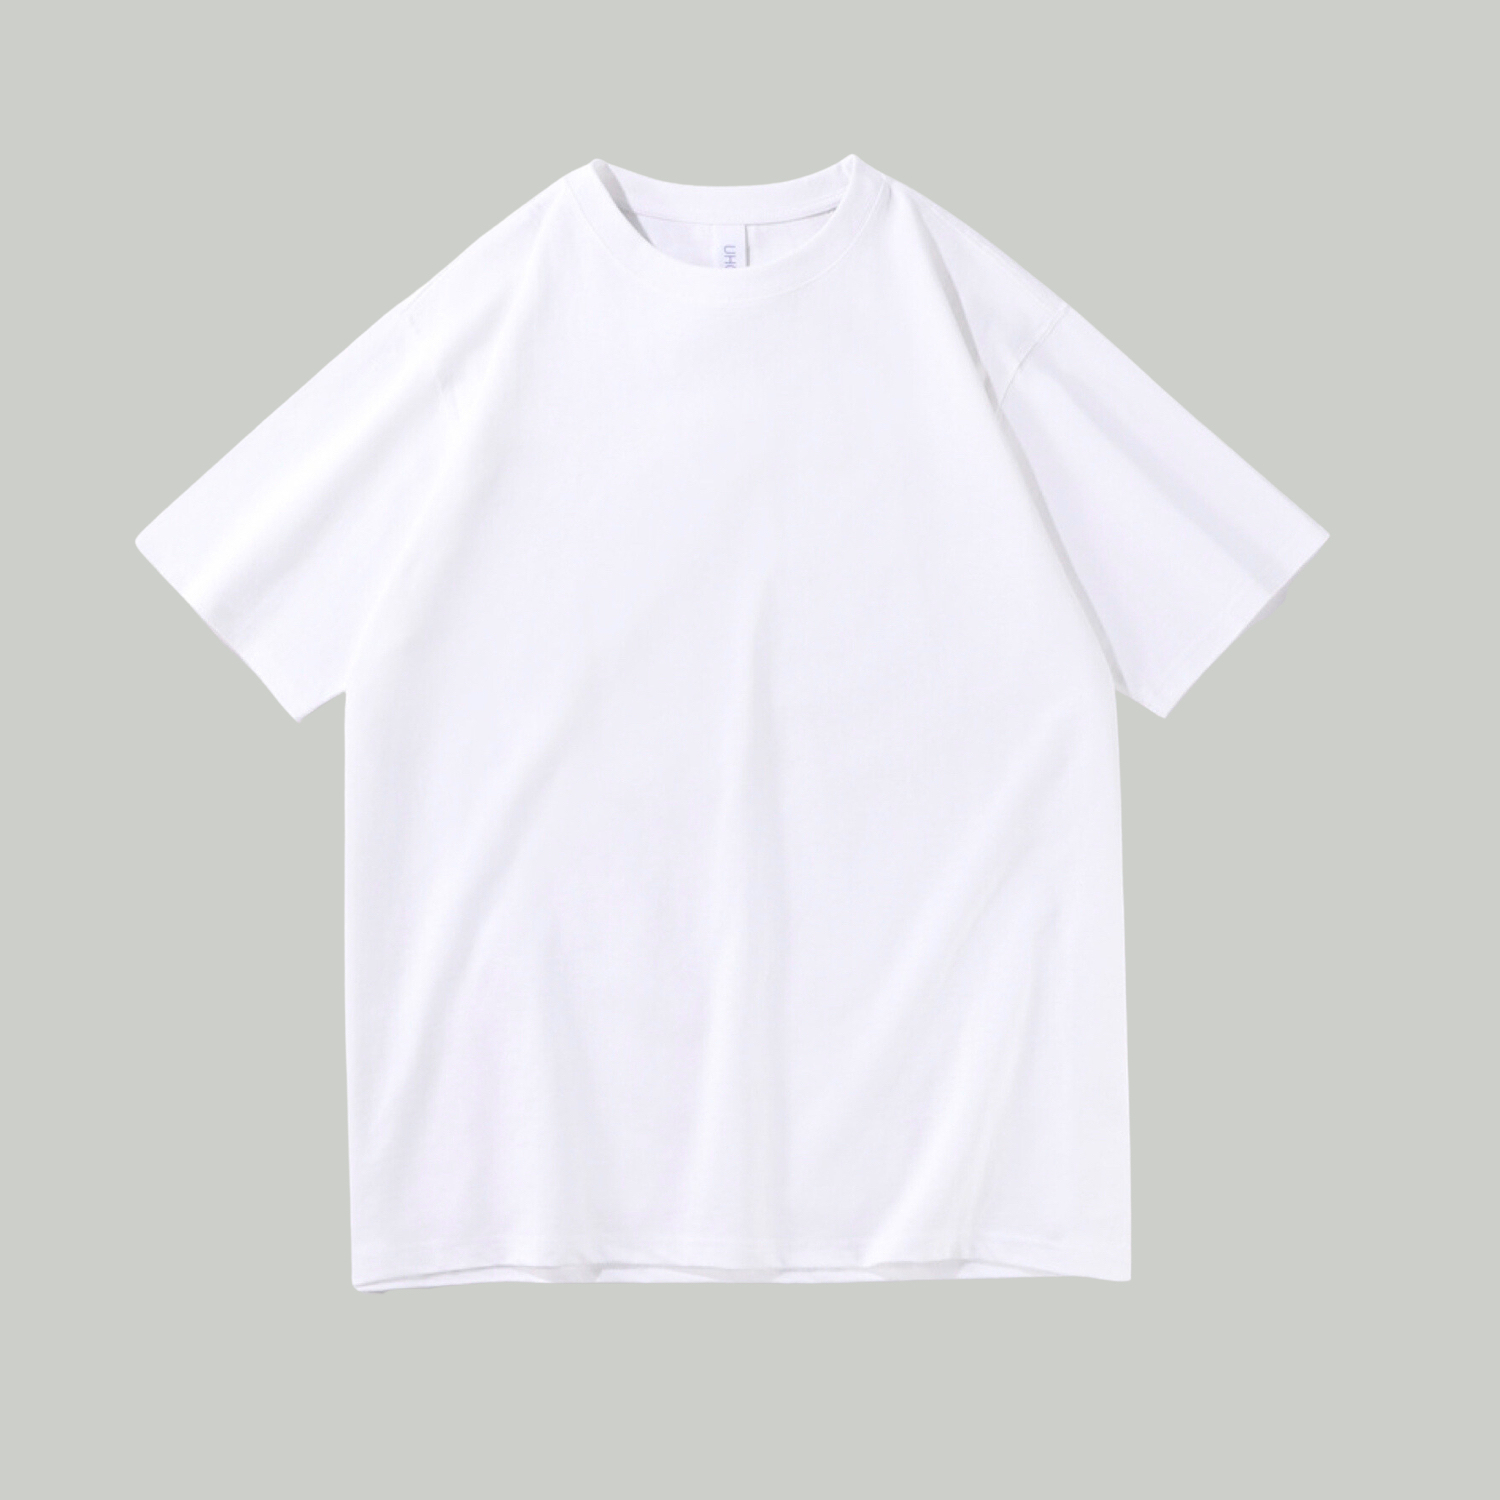  Men 100% Cotton Drop Shoulder Graphic Tees - Stylish Urban  Streetwear Fashion T-Shirts : Clothing, Shoes & Jewelry